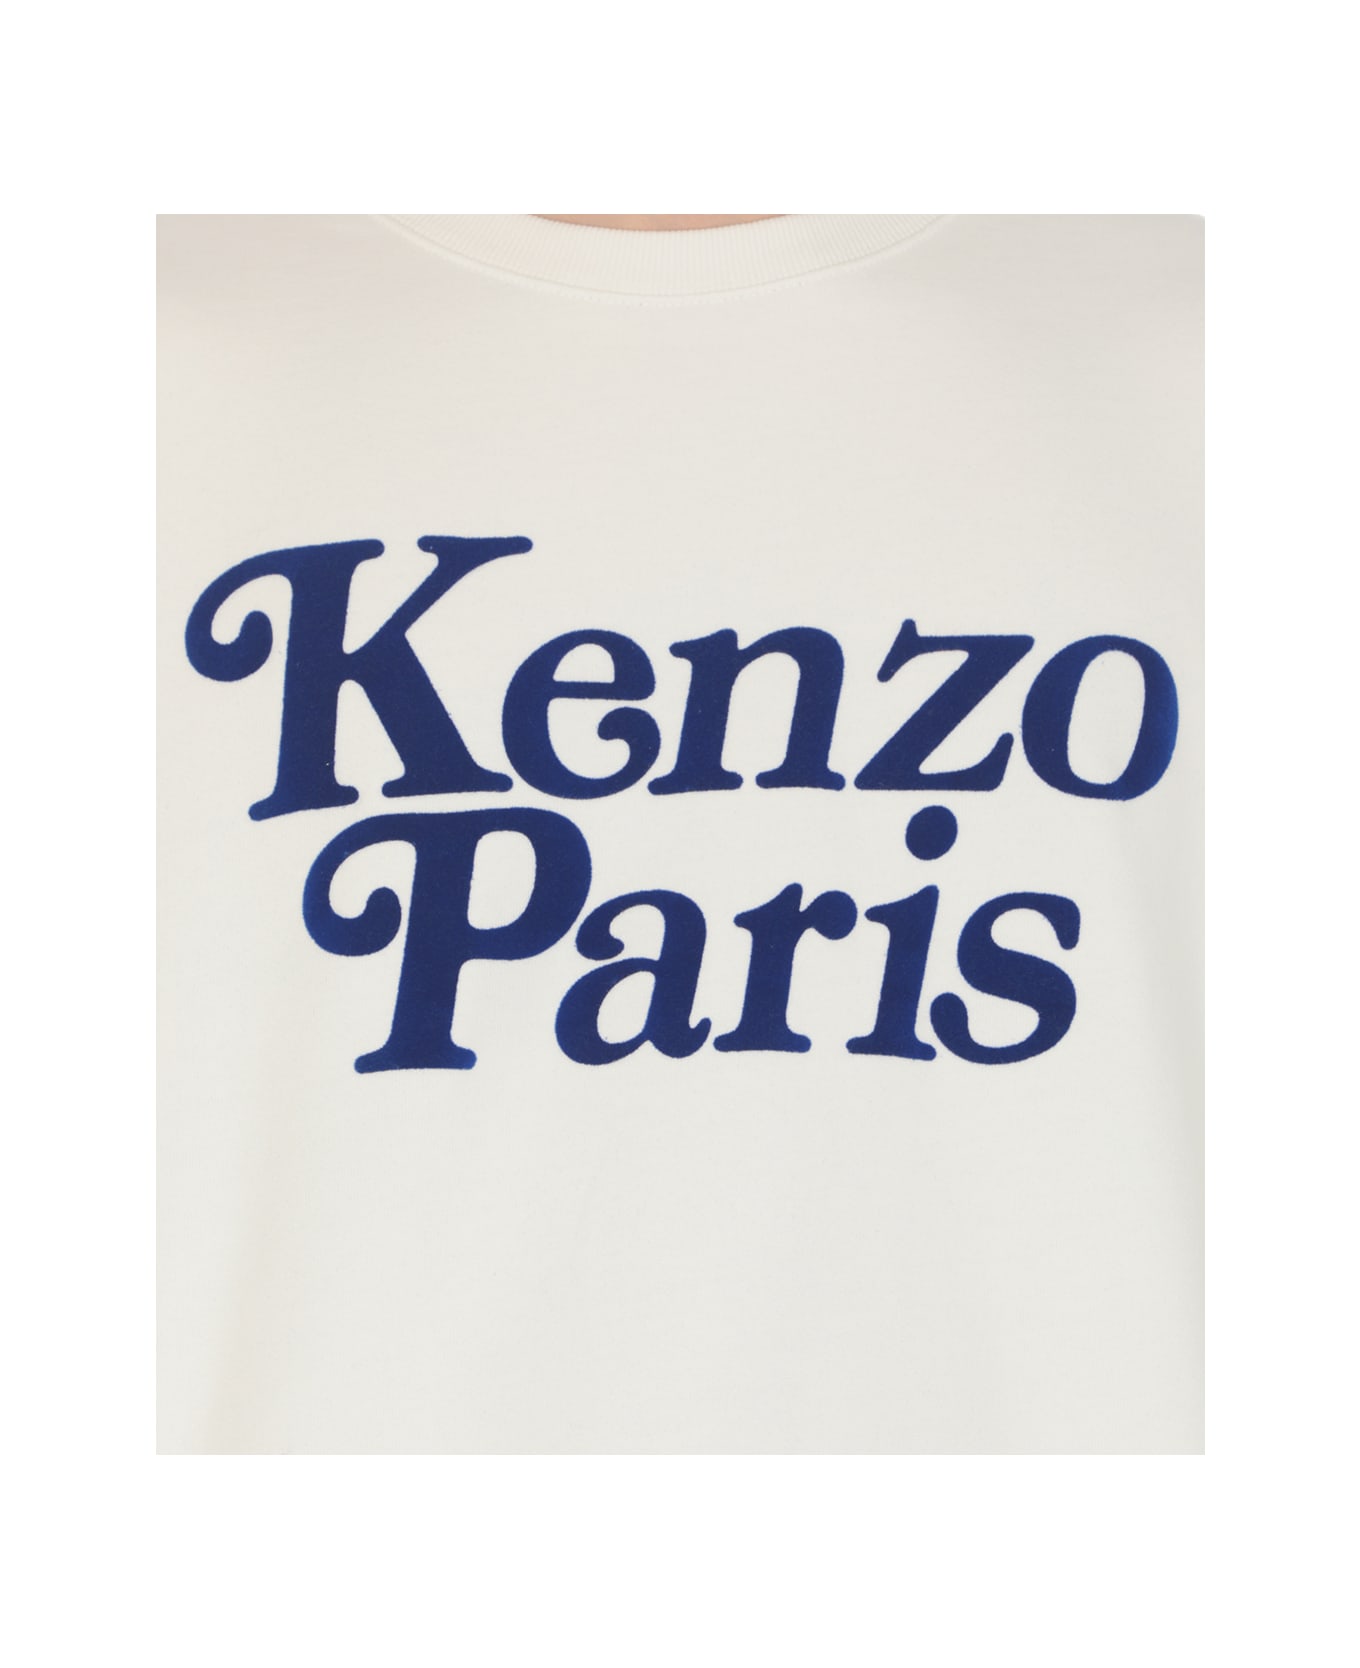 Kenzo White Cotton Sweatshirt - White